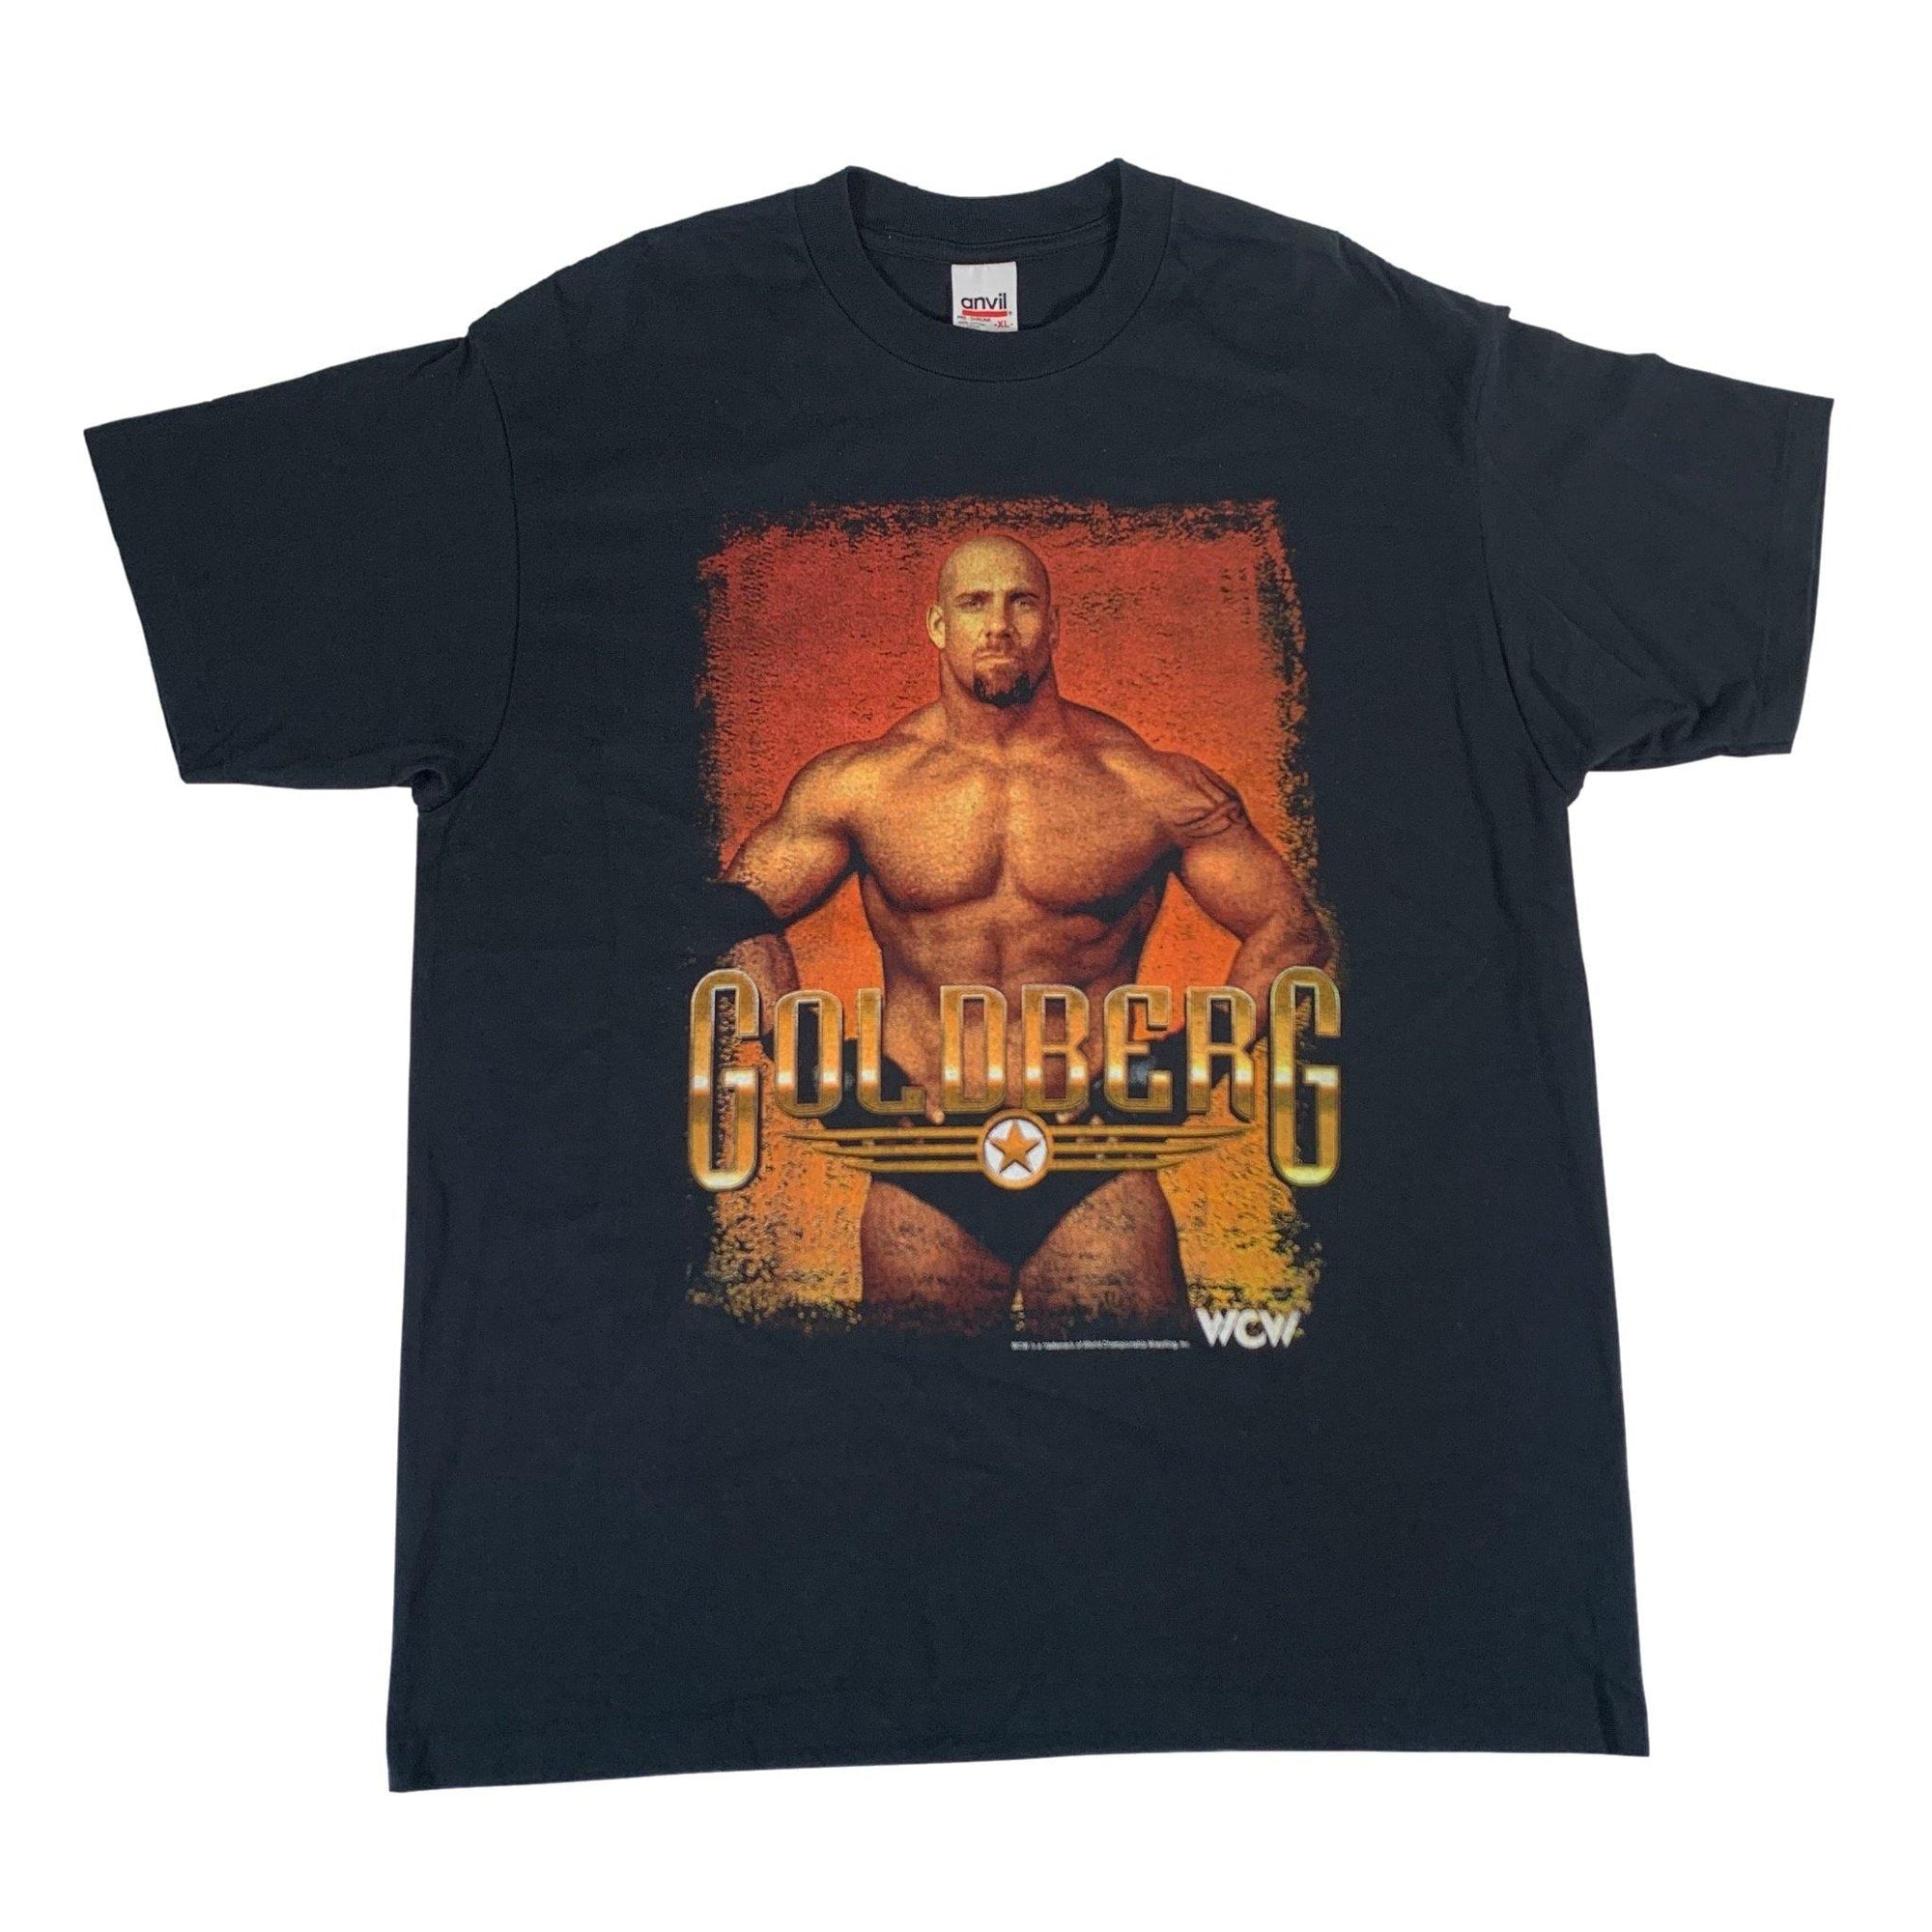 Vintage Goldberg "WCW" T-Shirt - jointcustodydc